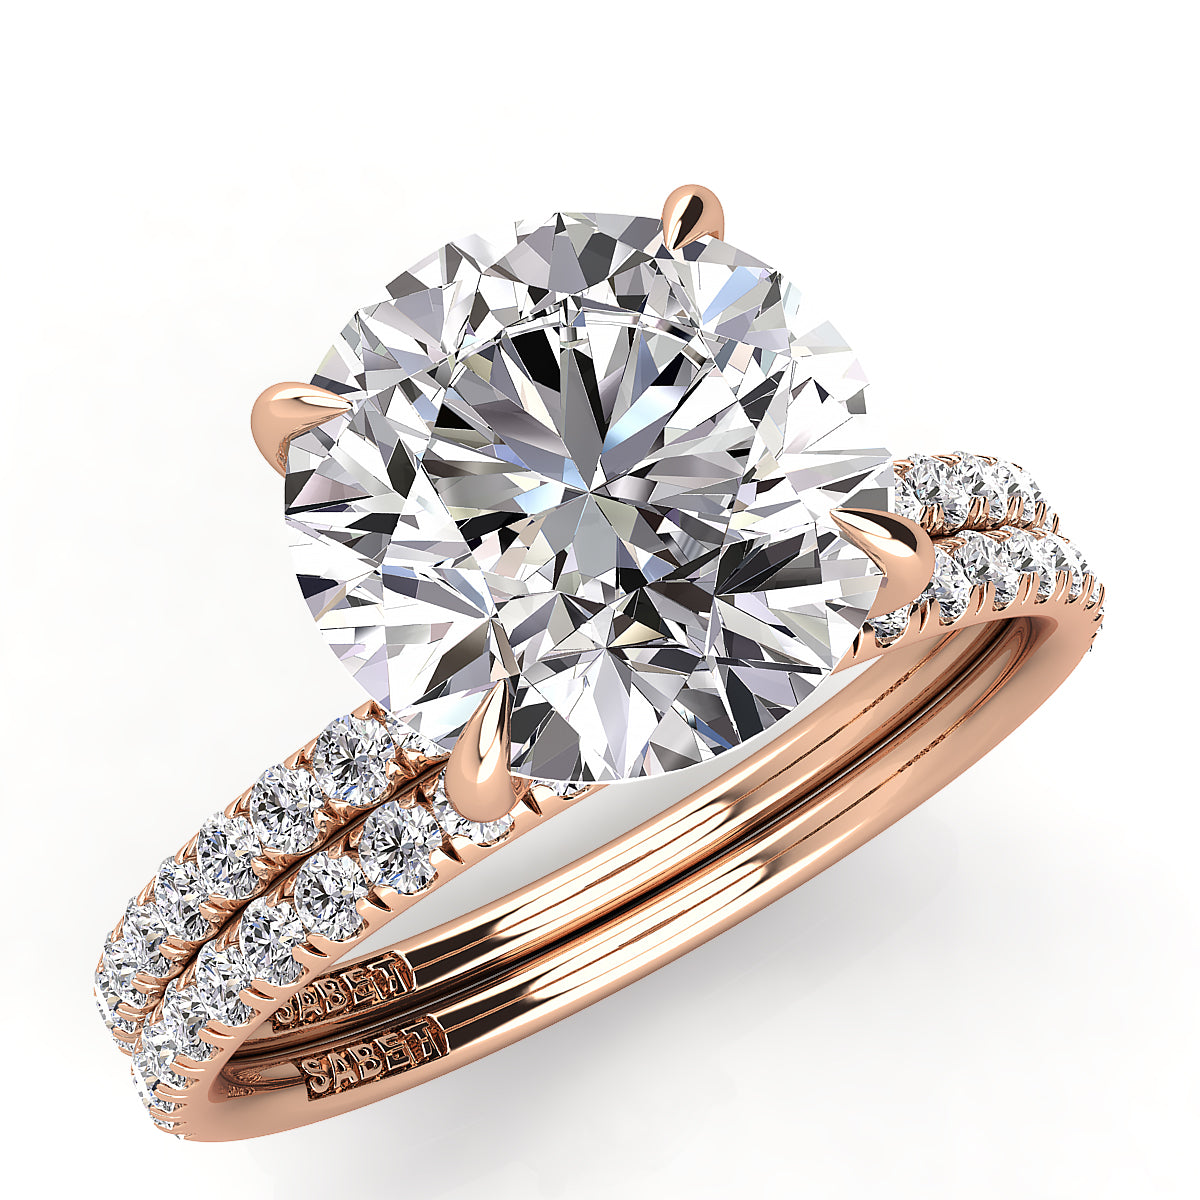 Round Pave Diamond Engagement Ring with Diamond Belt Set